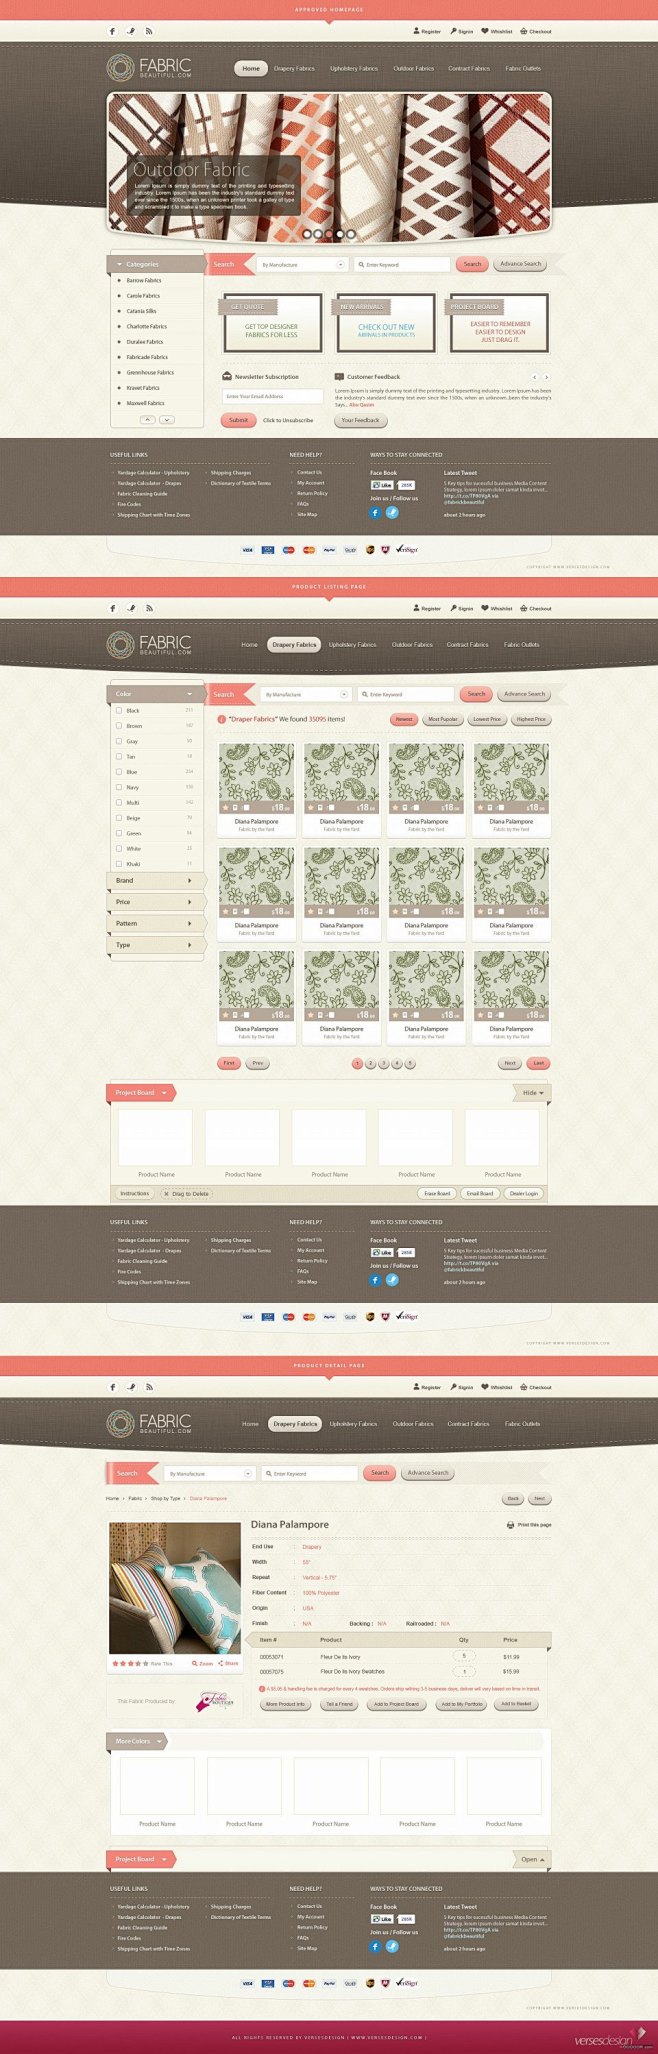 FABRIC织物美全-国外布料网站设计....